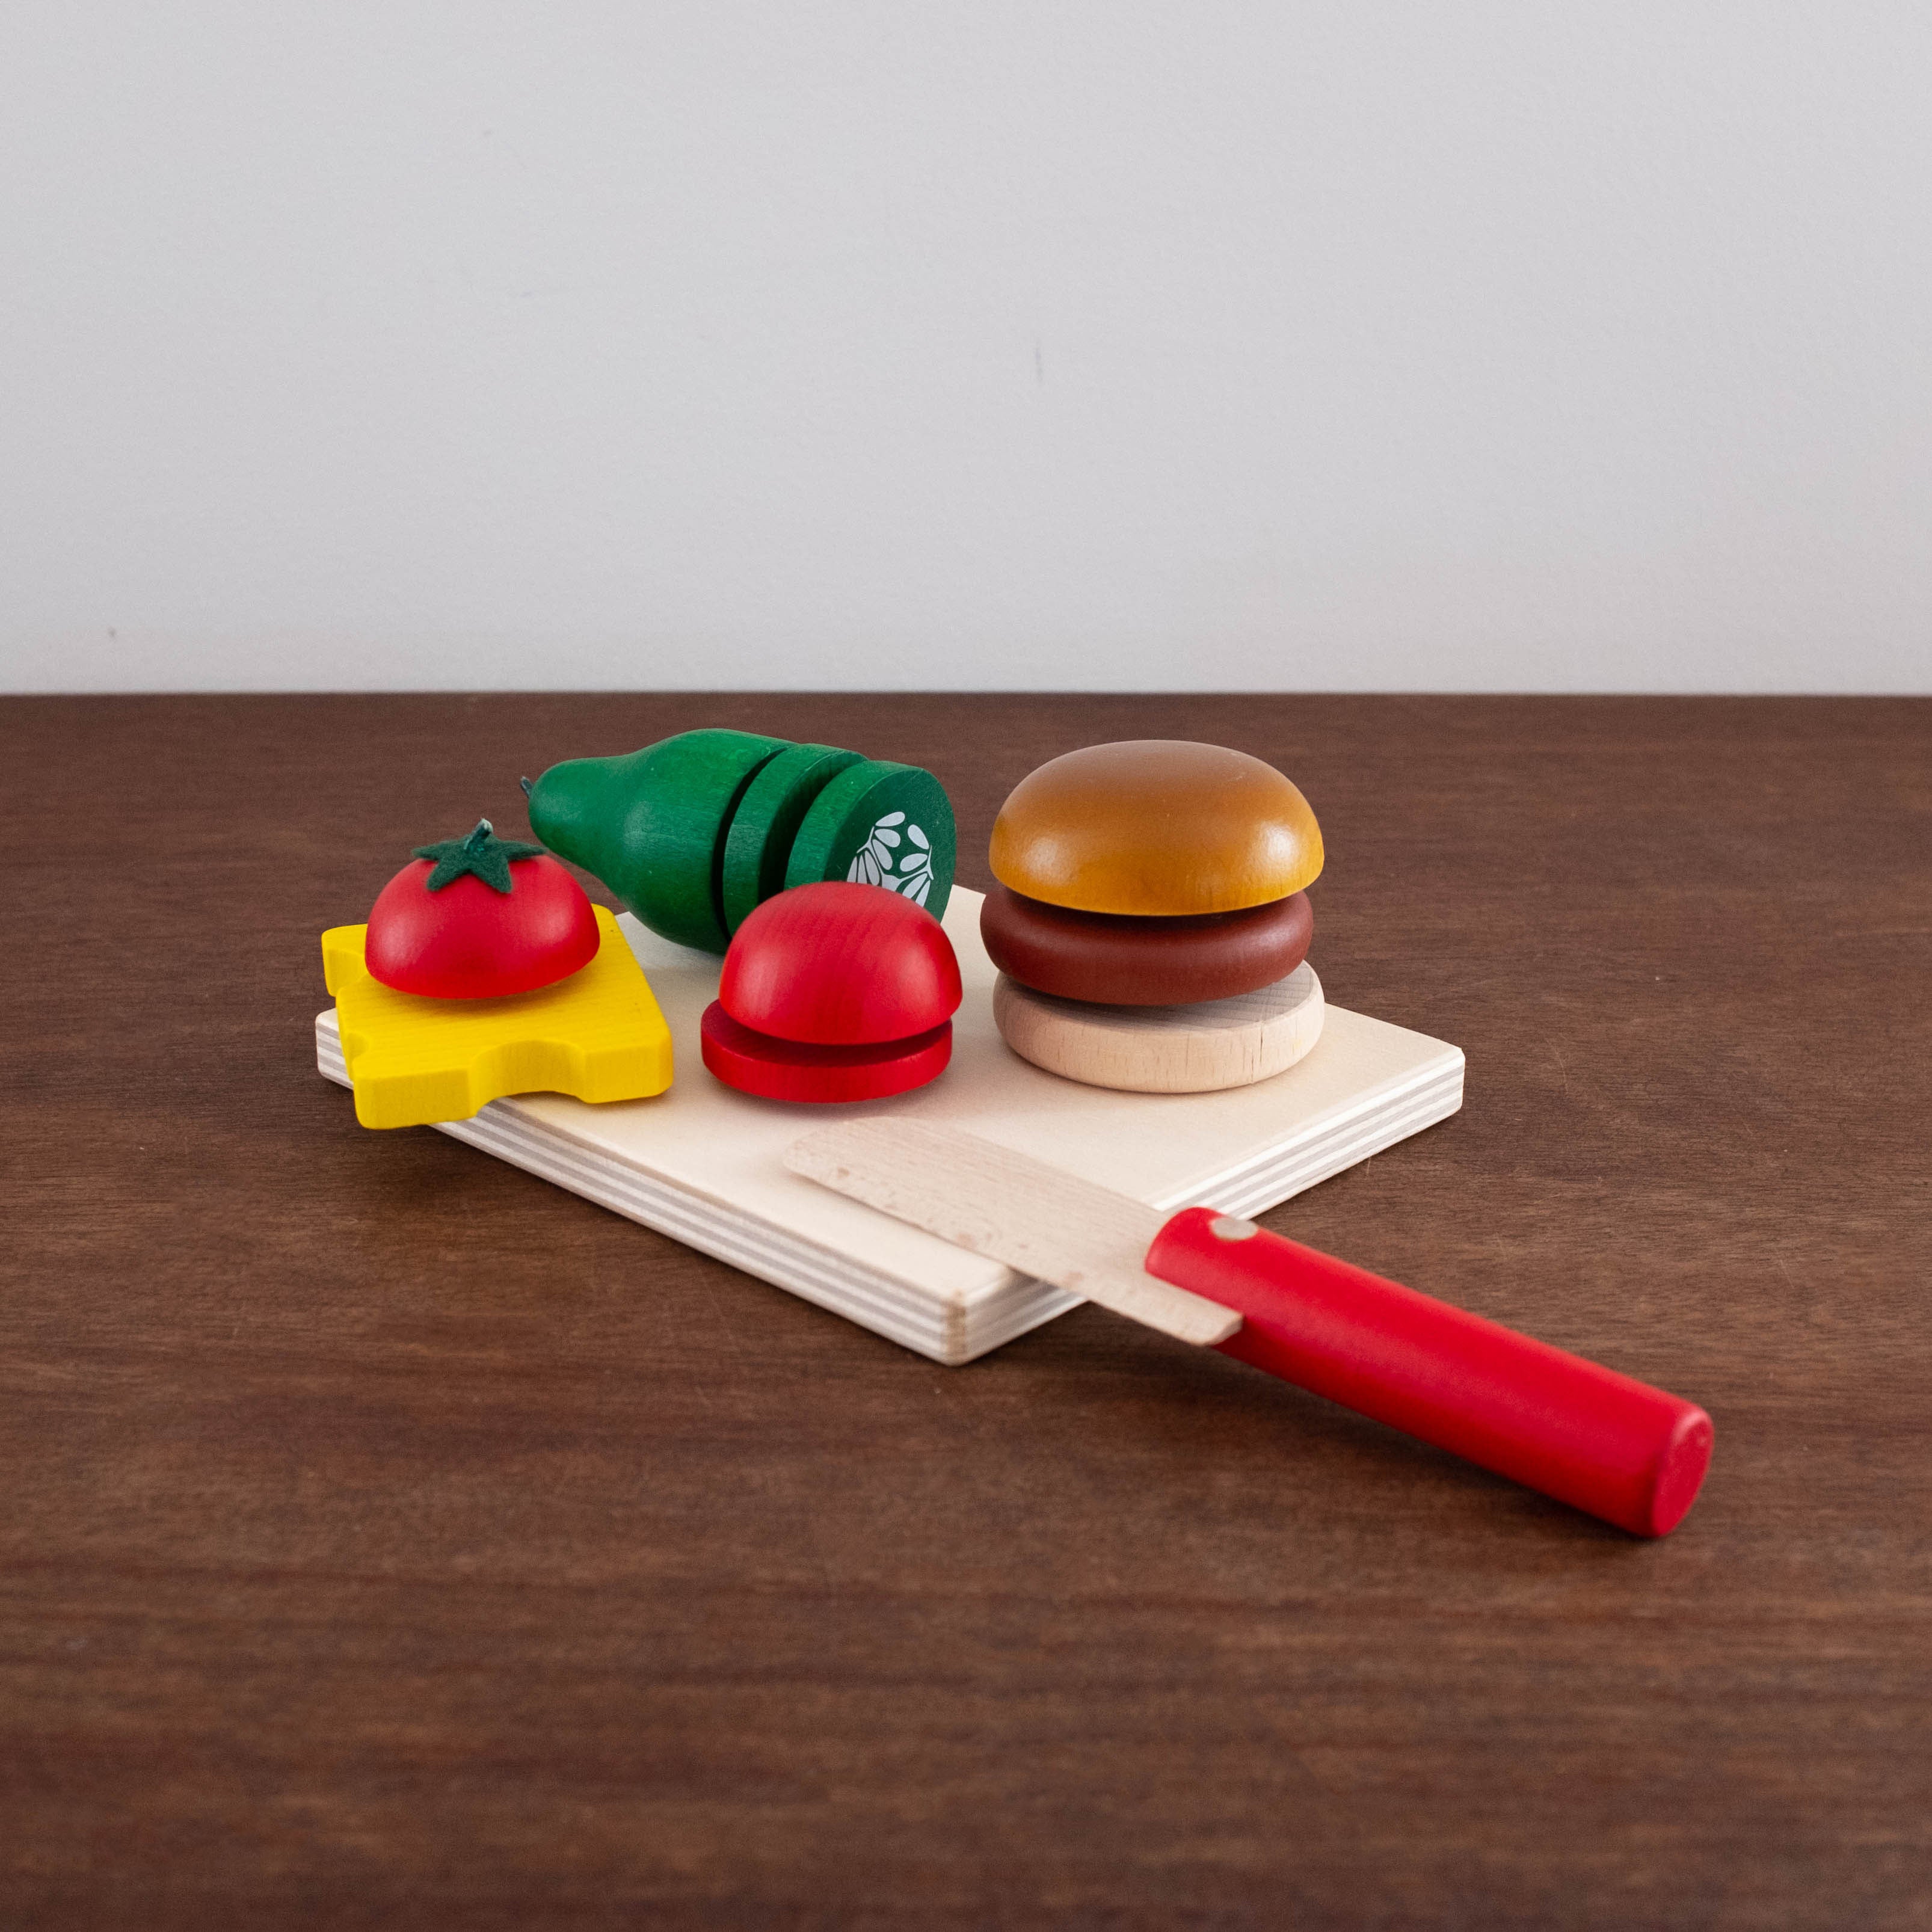 Wooden Cheeseburger Cut Up Toy Set